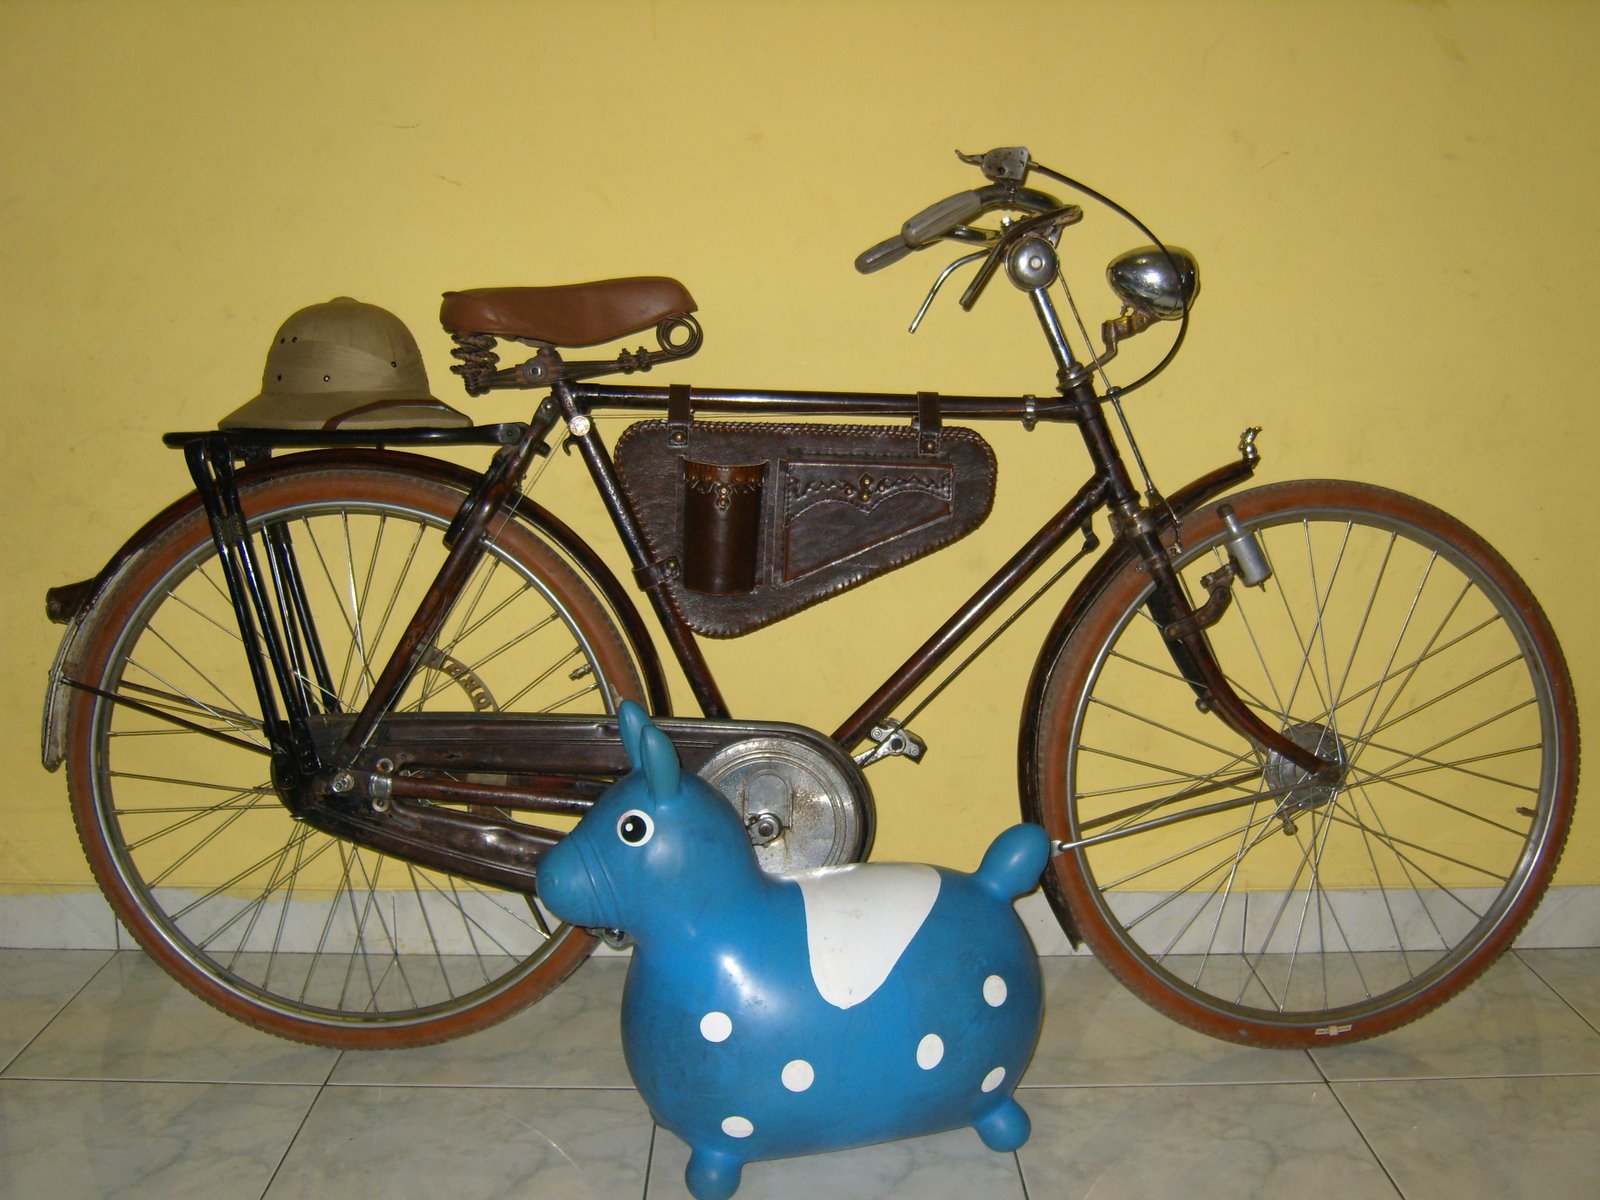 Pameran Sepeda Bicycles Antik Driwancybermuseums Blog